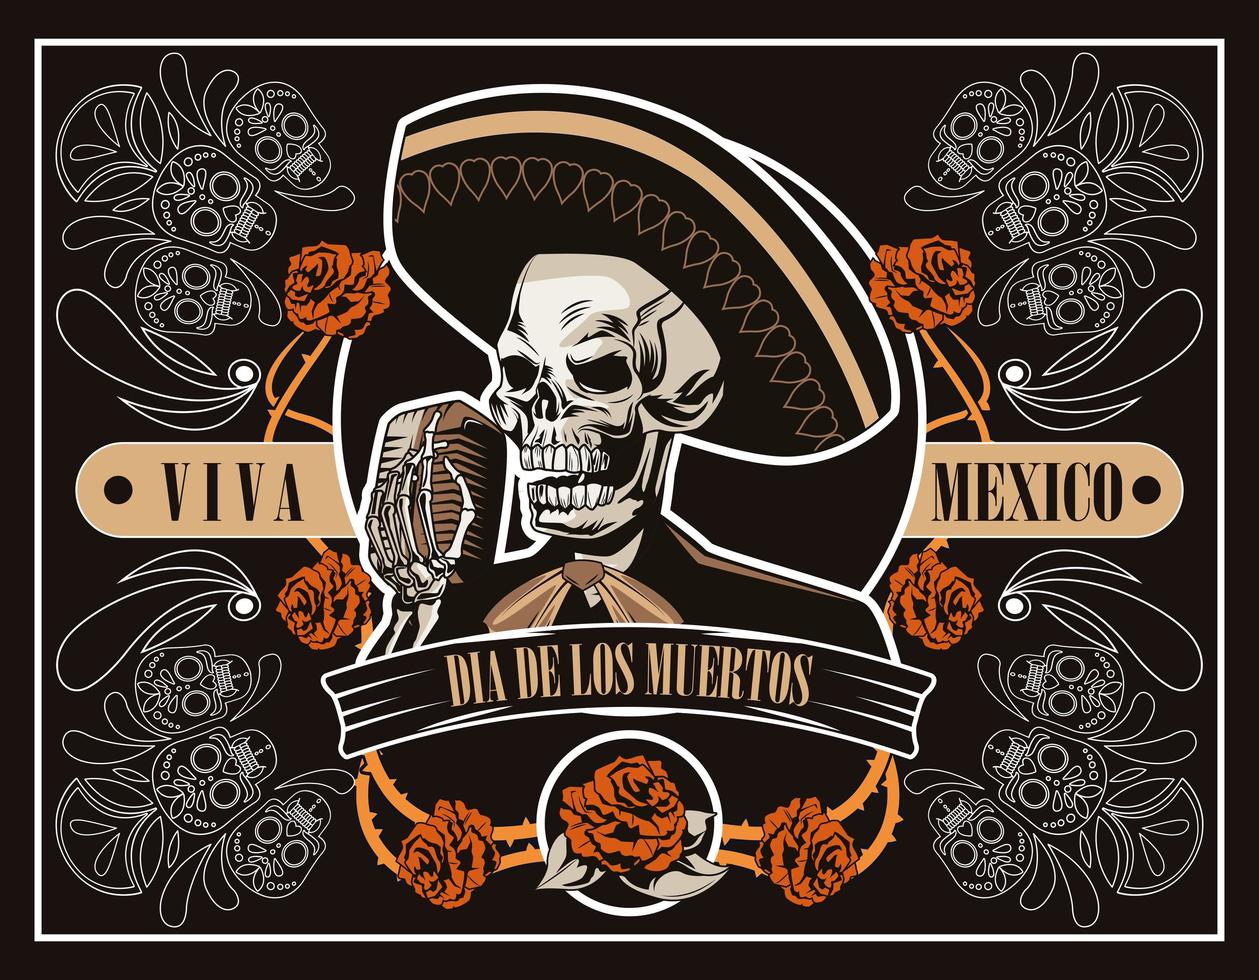 dia de los muertos affisch med mariachi skalle sjunger med mikrofon i brun affisch vektor